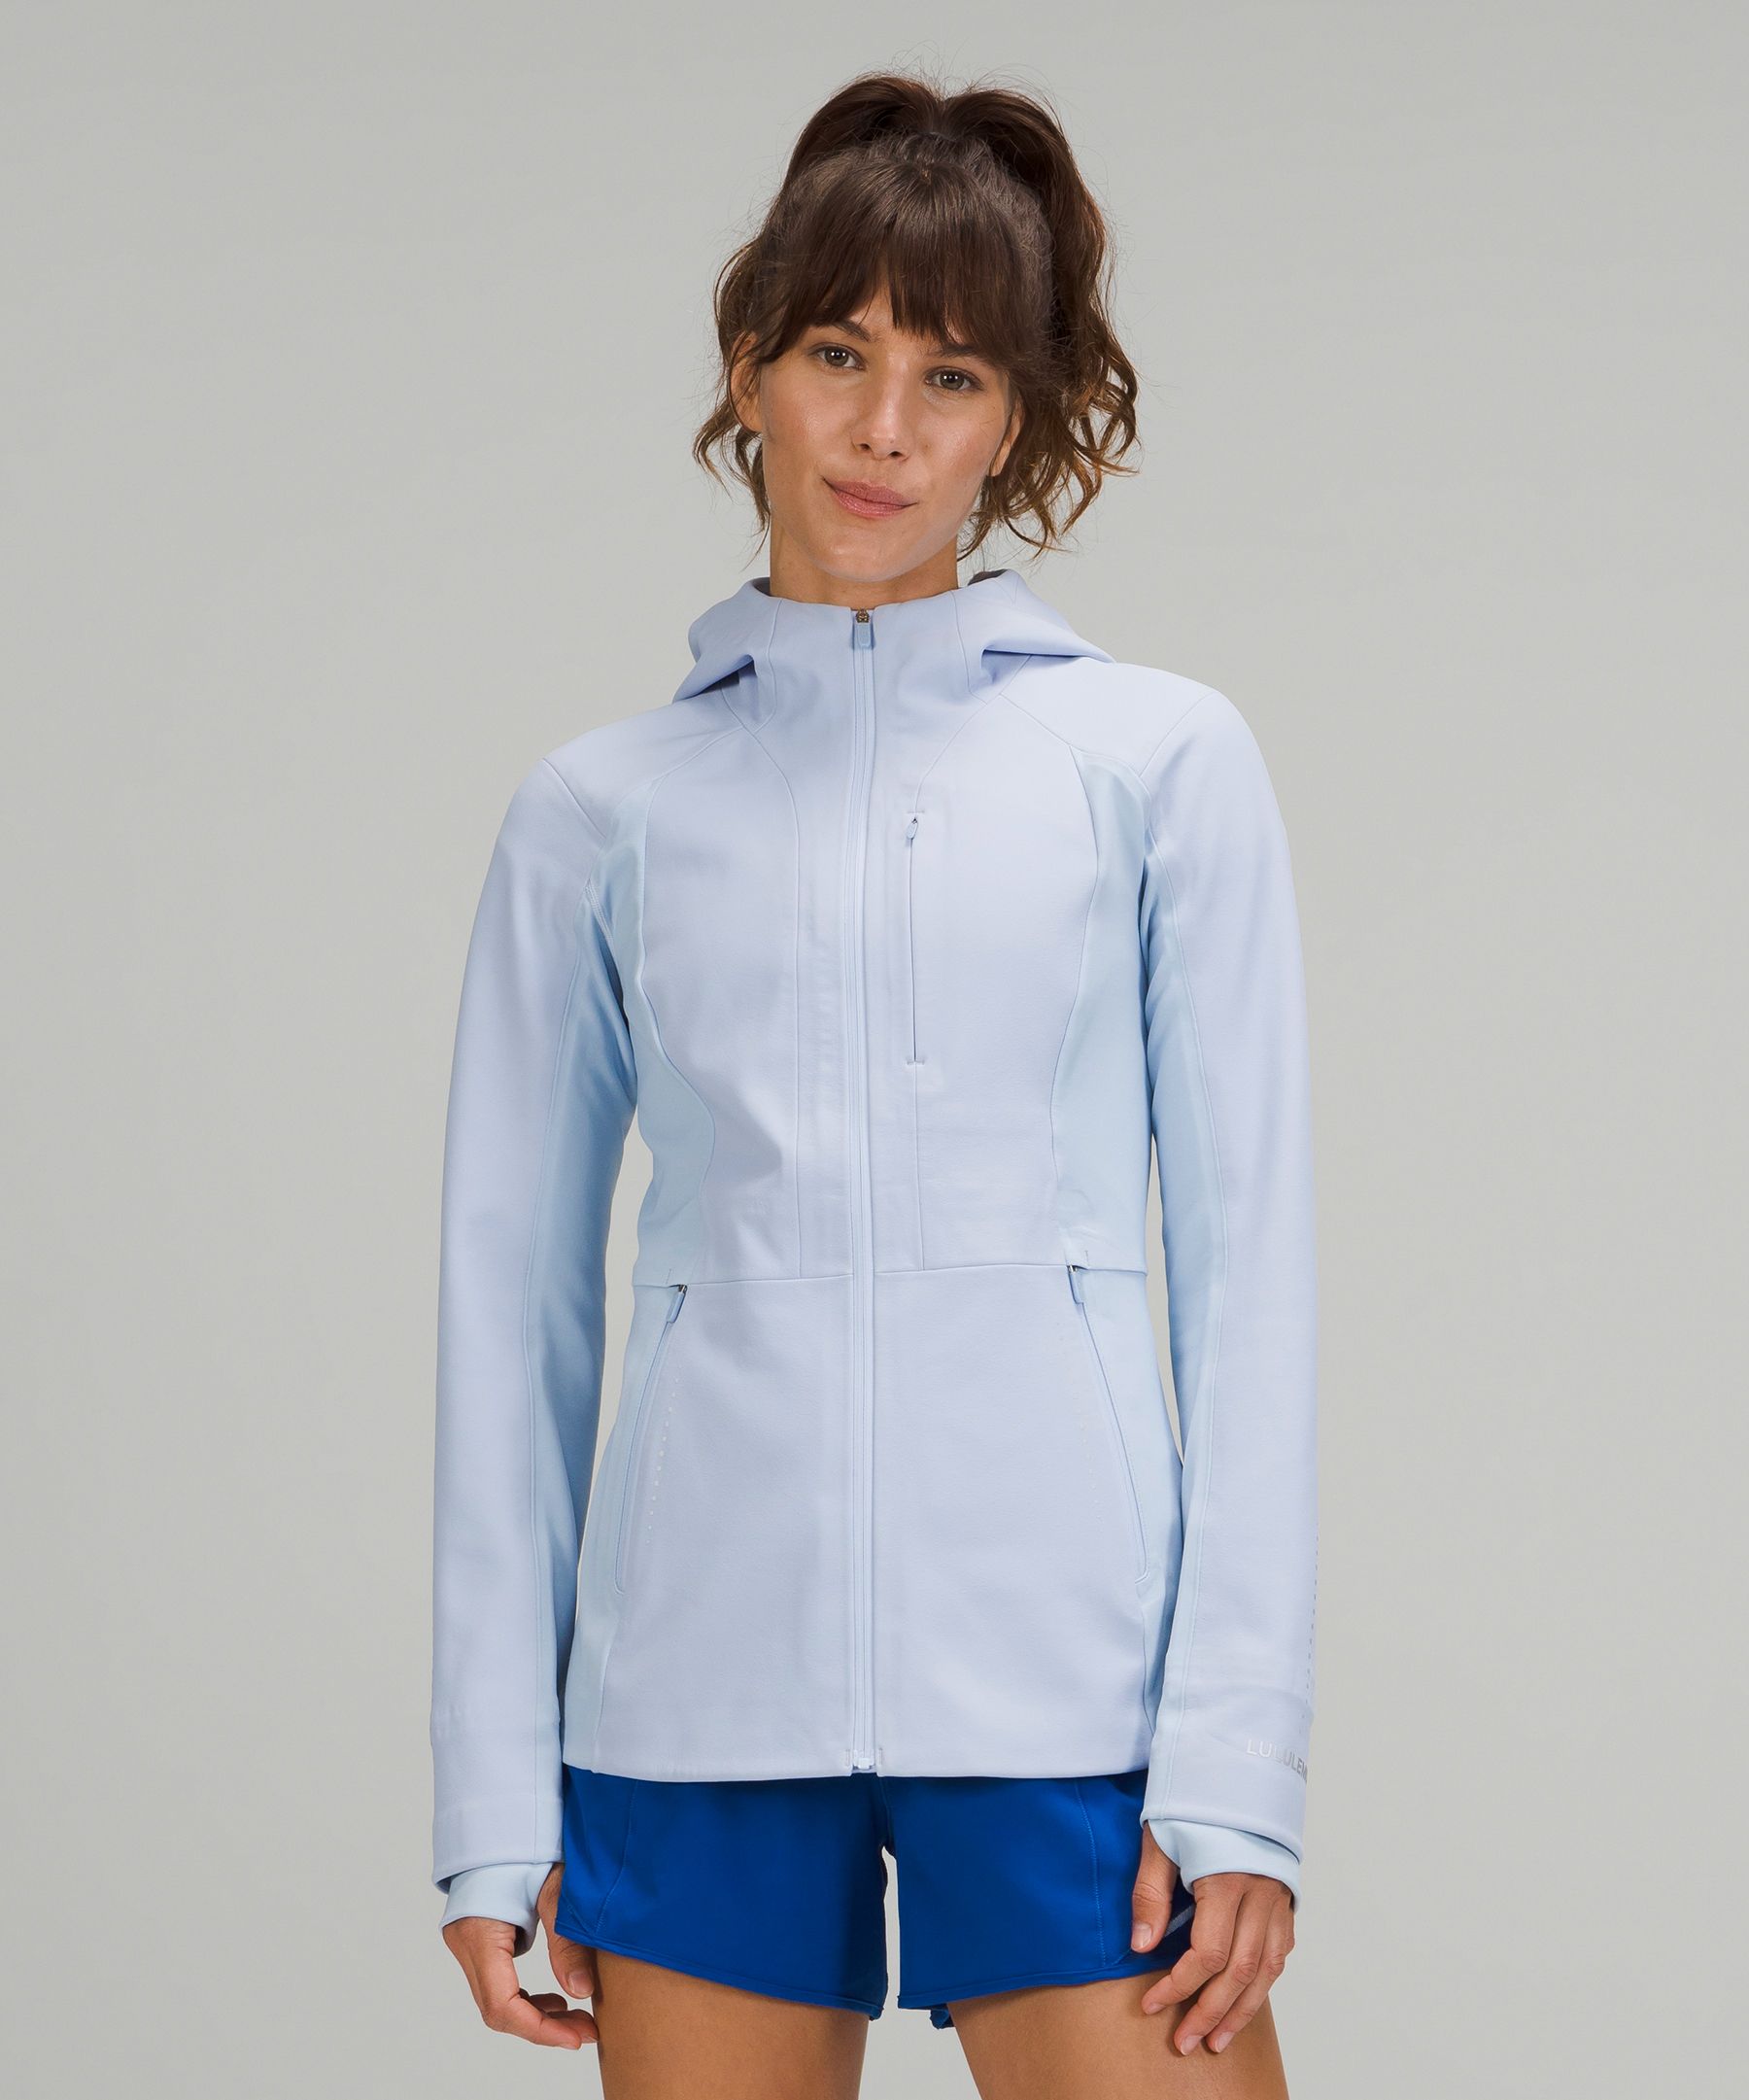 lululemon athletica, Jackets & Coats, New Lululemon Cross Chill Jacket  Repelshell Size 4 Sheer Blue Color Athletic